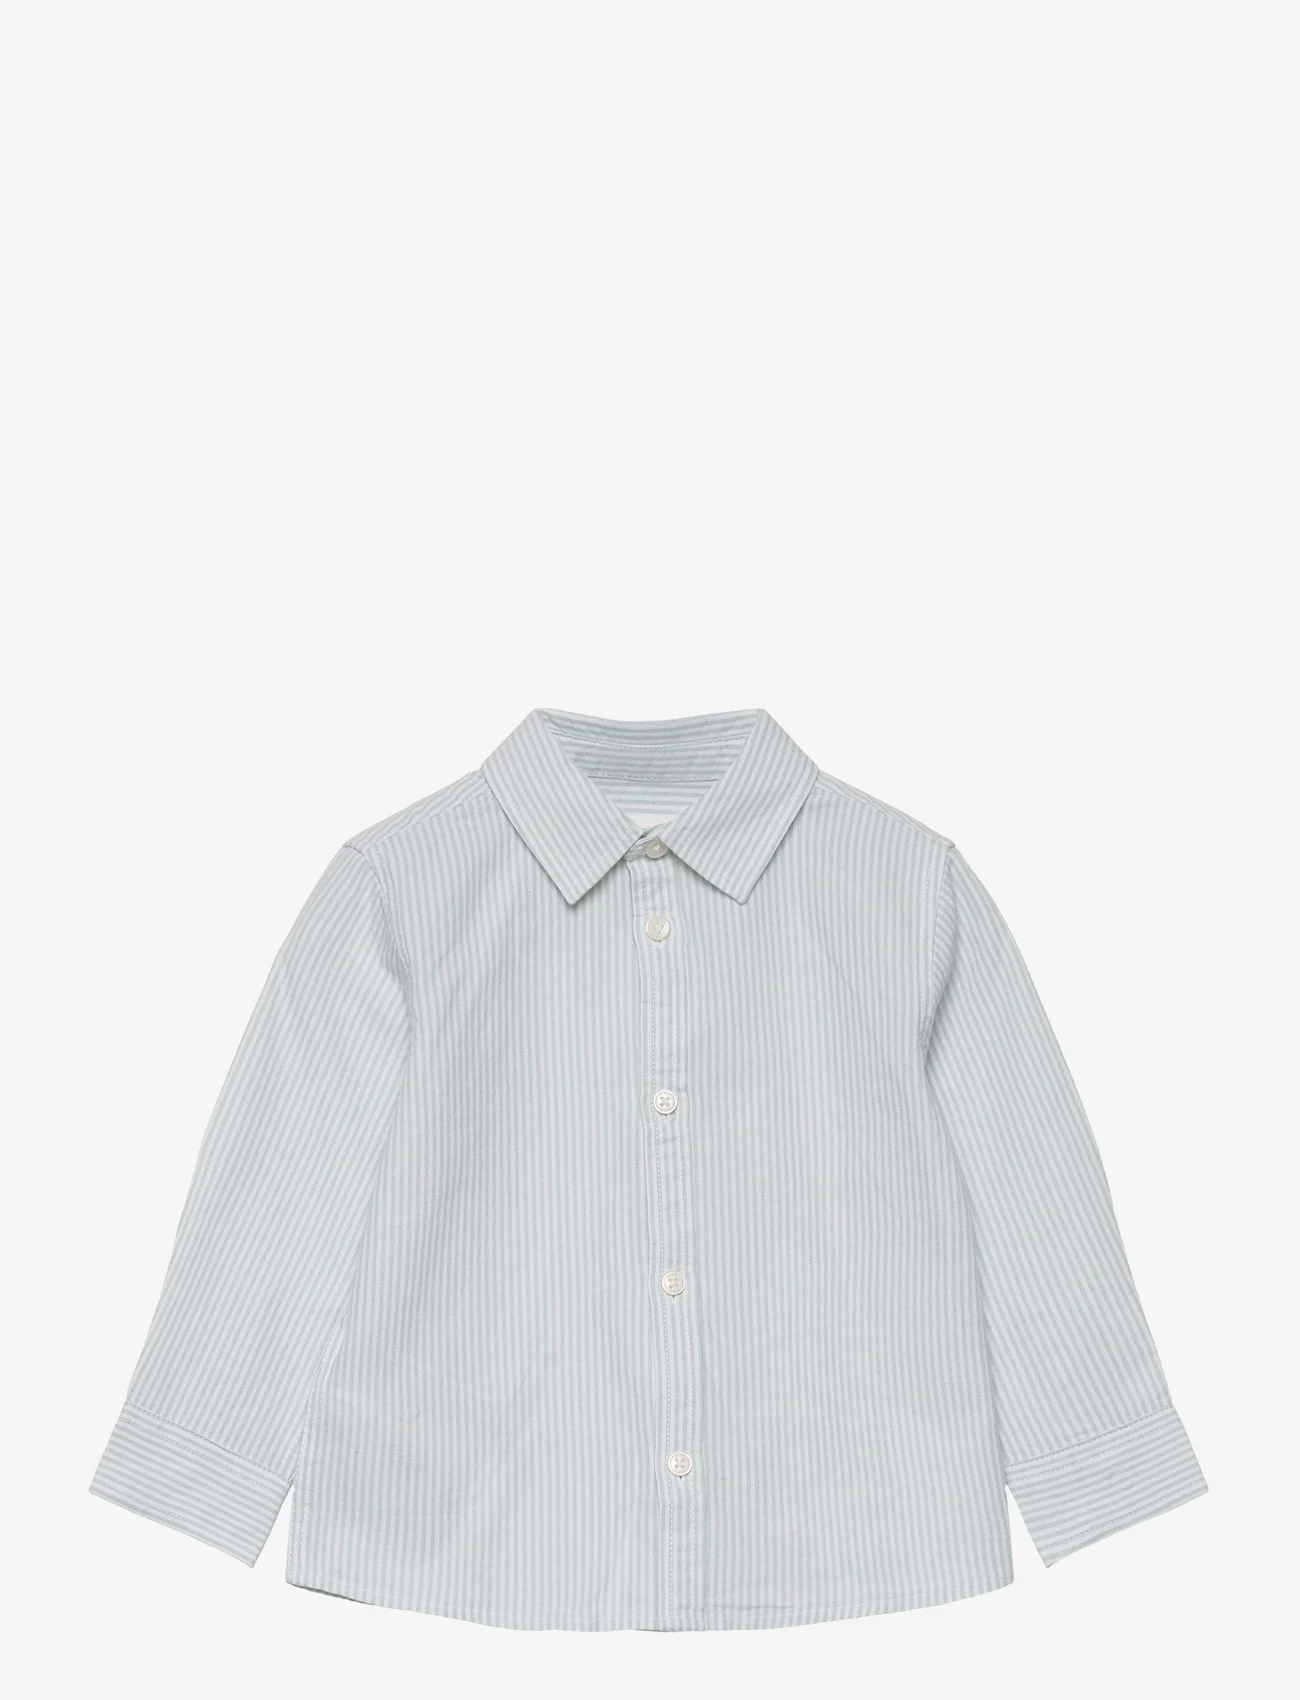 Mango - Oxford cotton shirt - pitkähihaiset kauluspaidat - green - 0